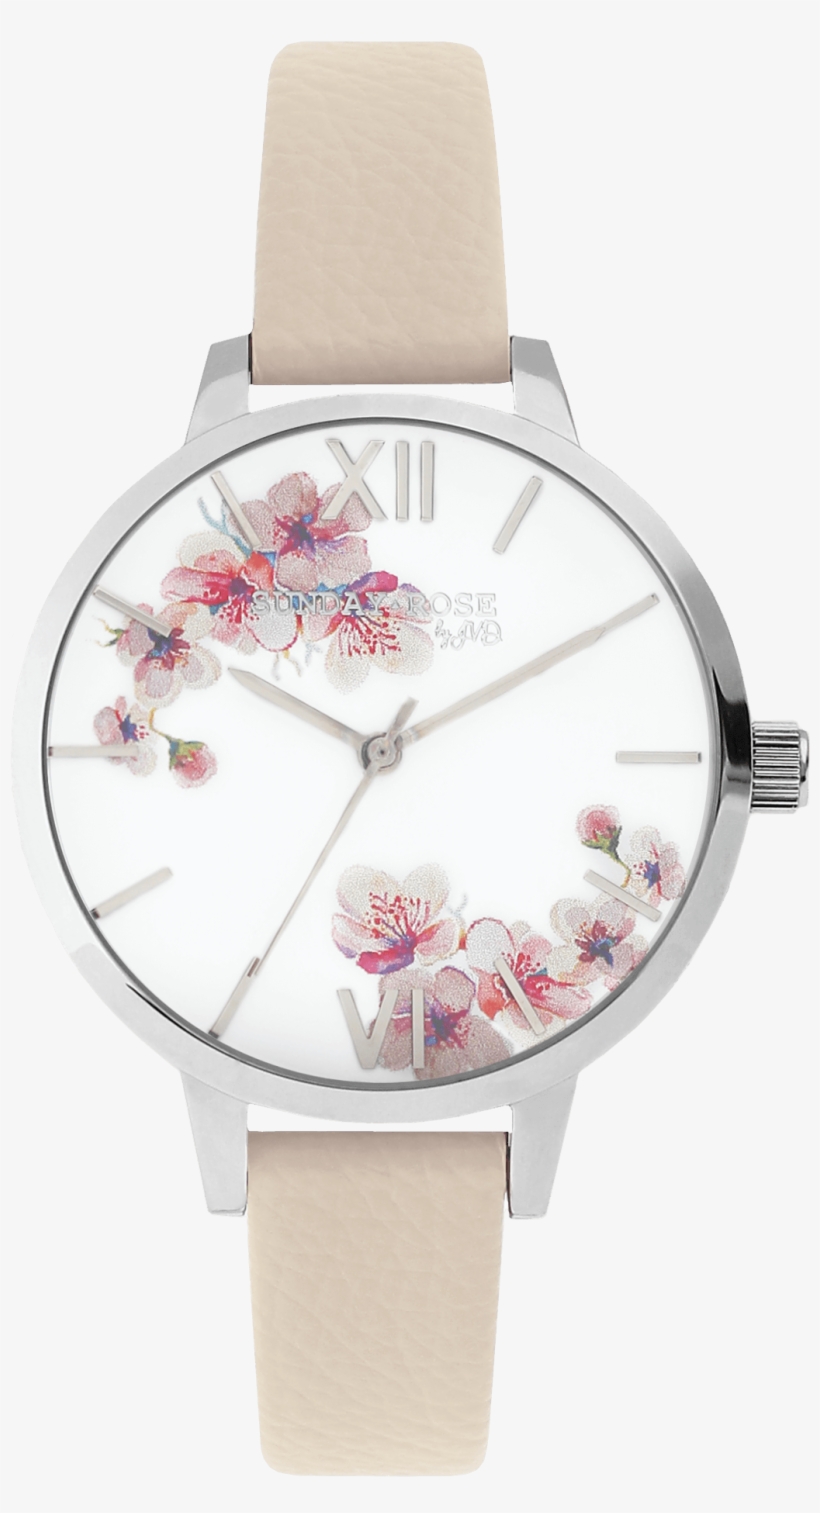 Sunday Rose Spirit Watercolor - Sunday Rose Watches, transparent png #16330